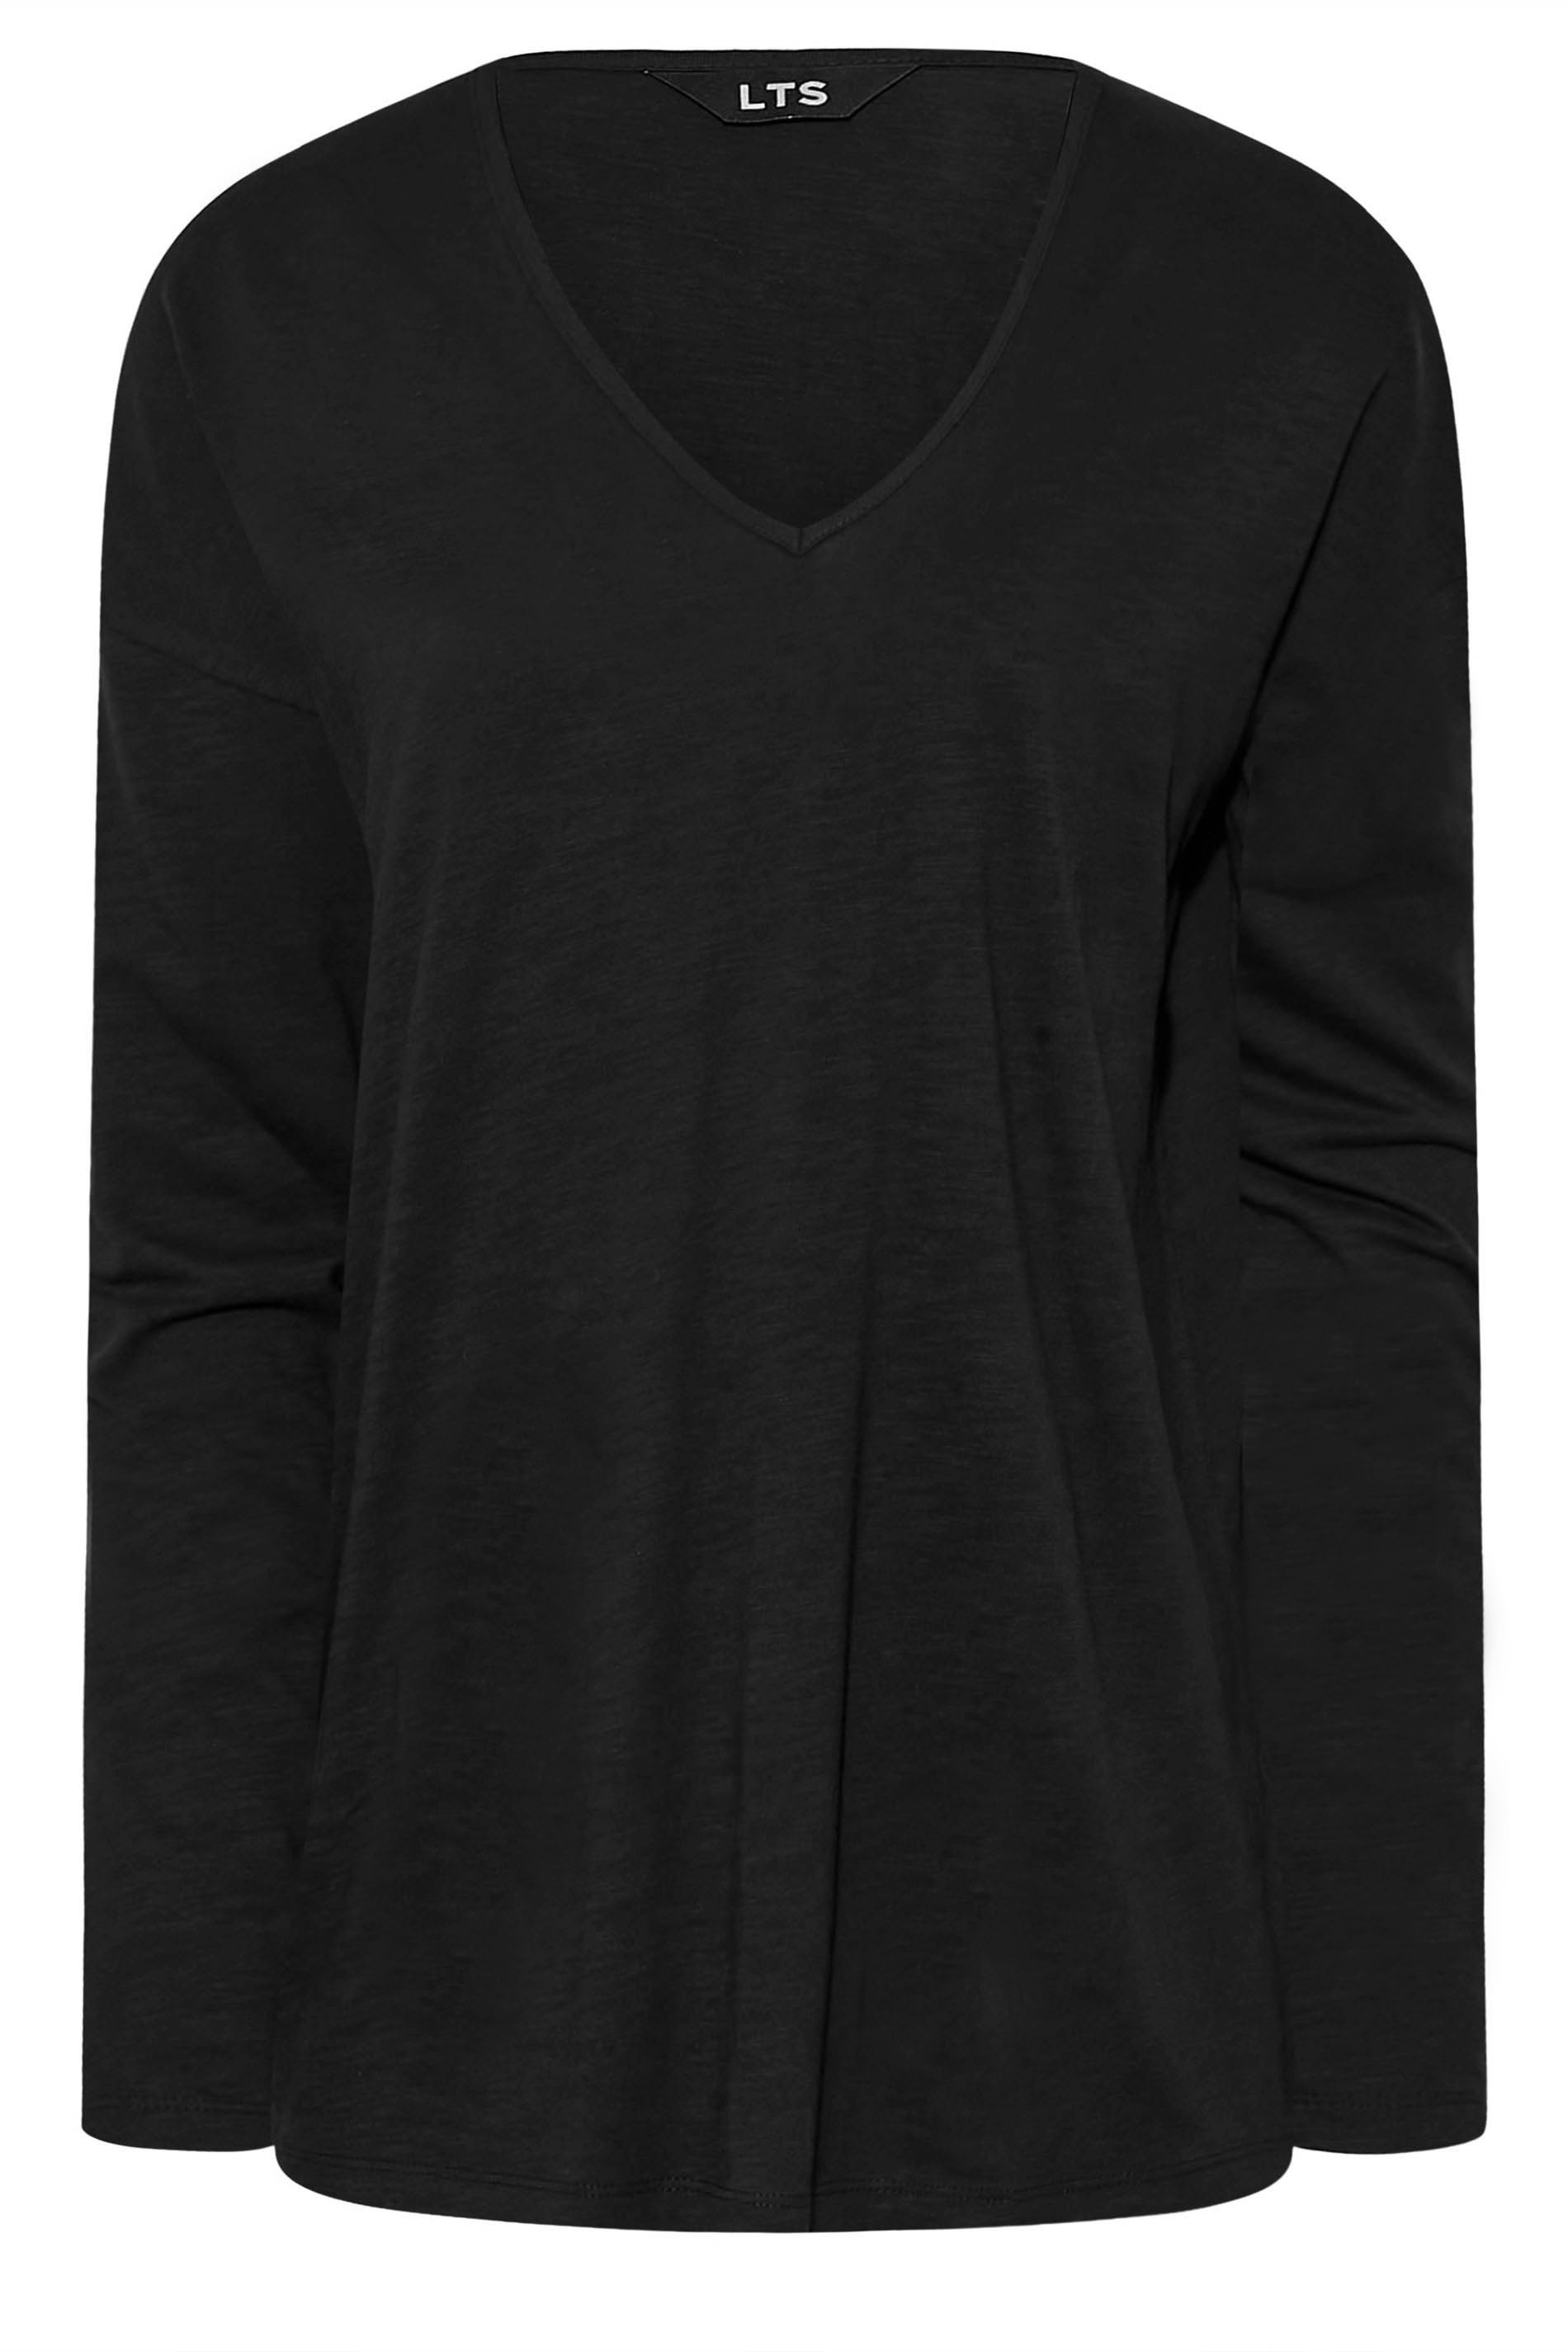  V-neck Long Sleeve Shirt Black - Women's Fashion